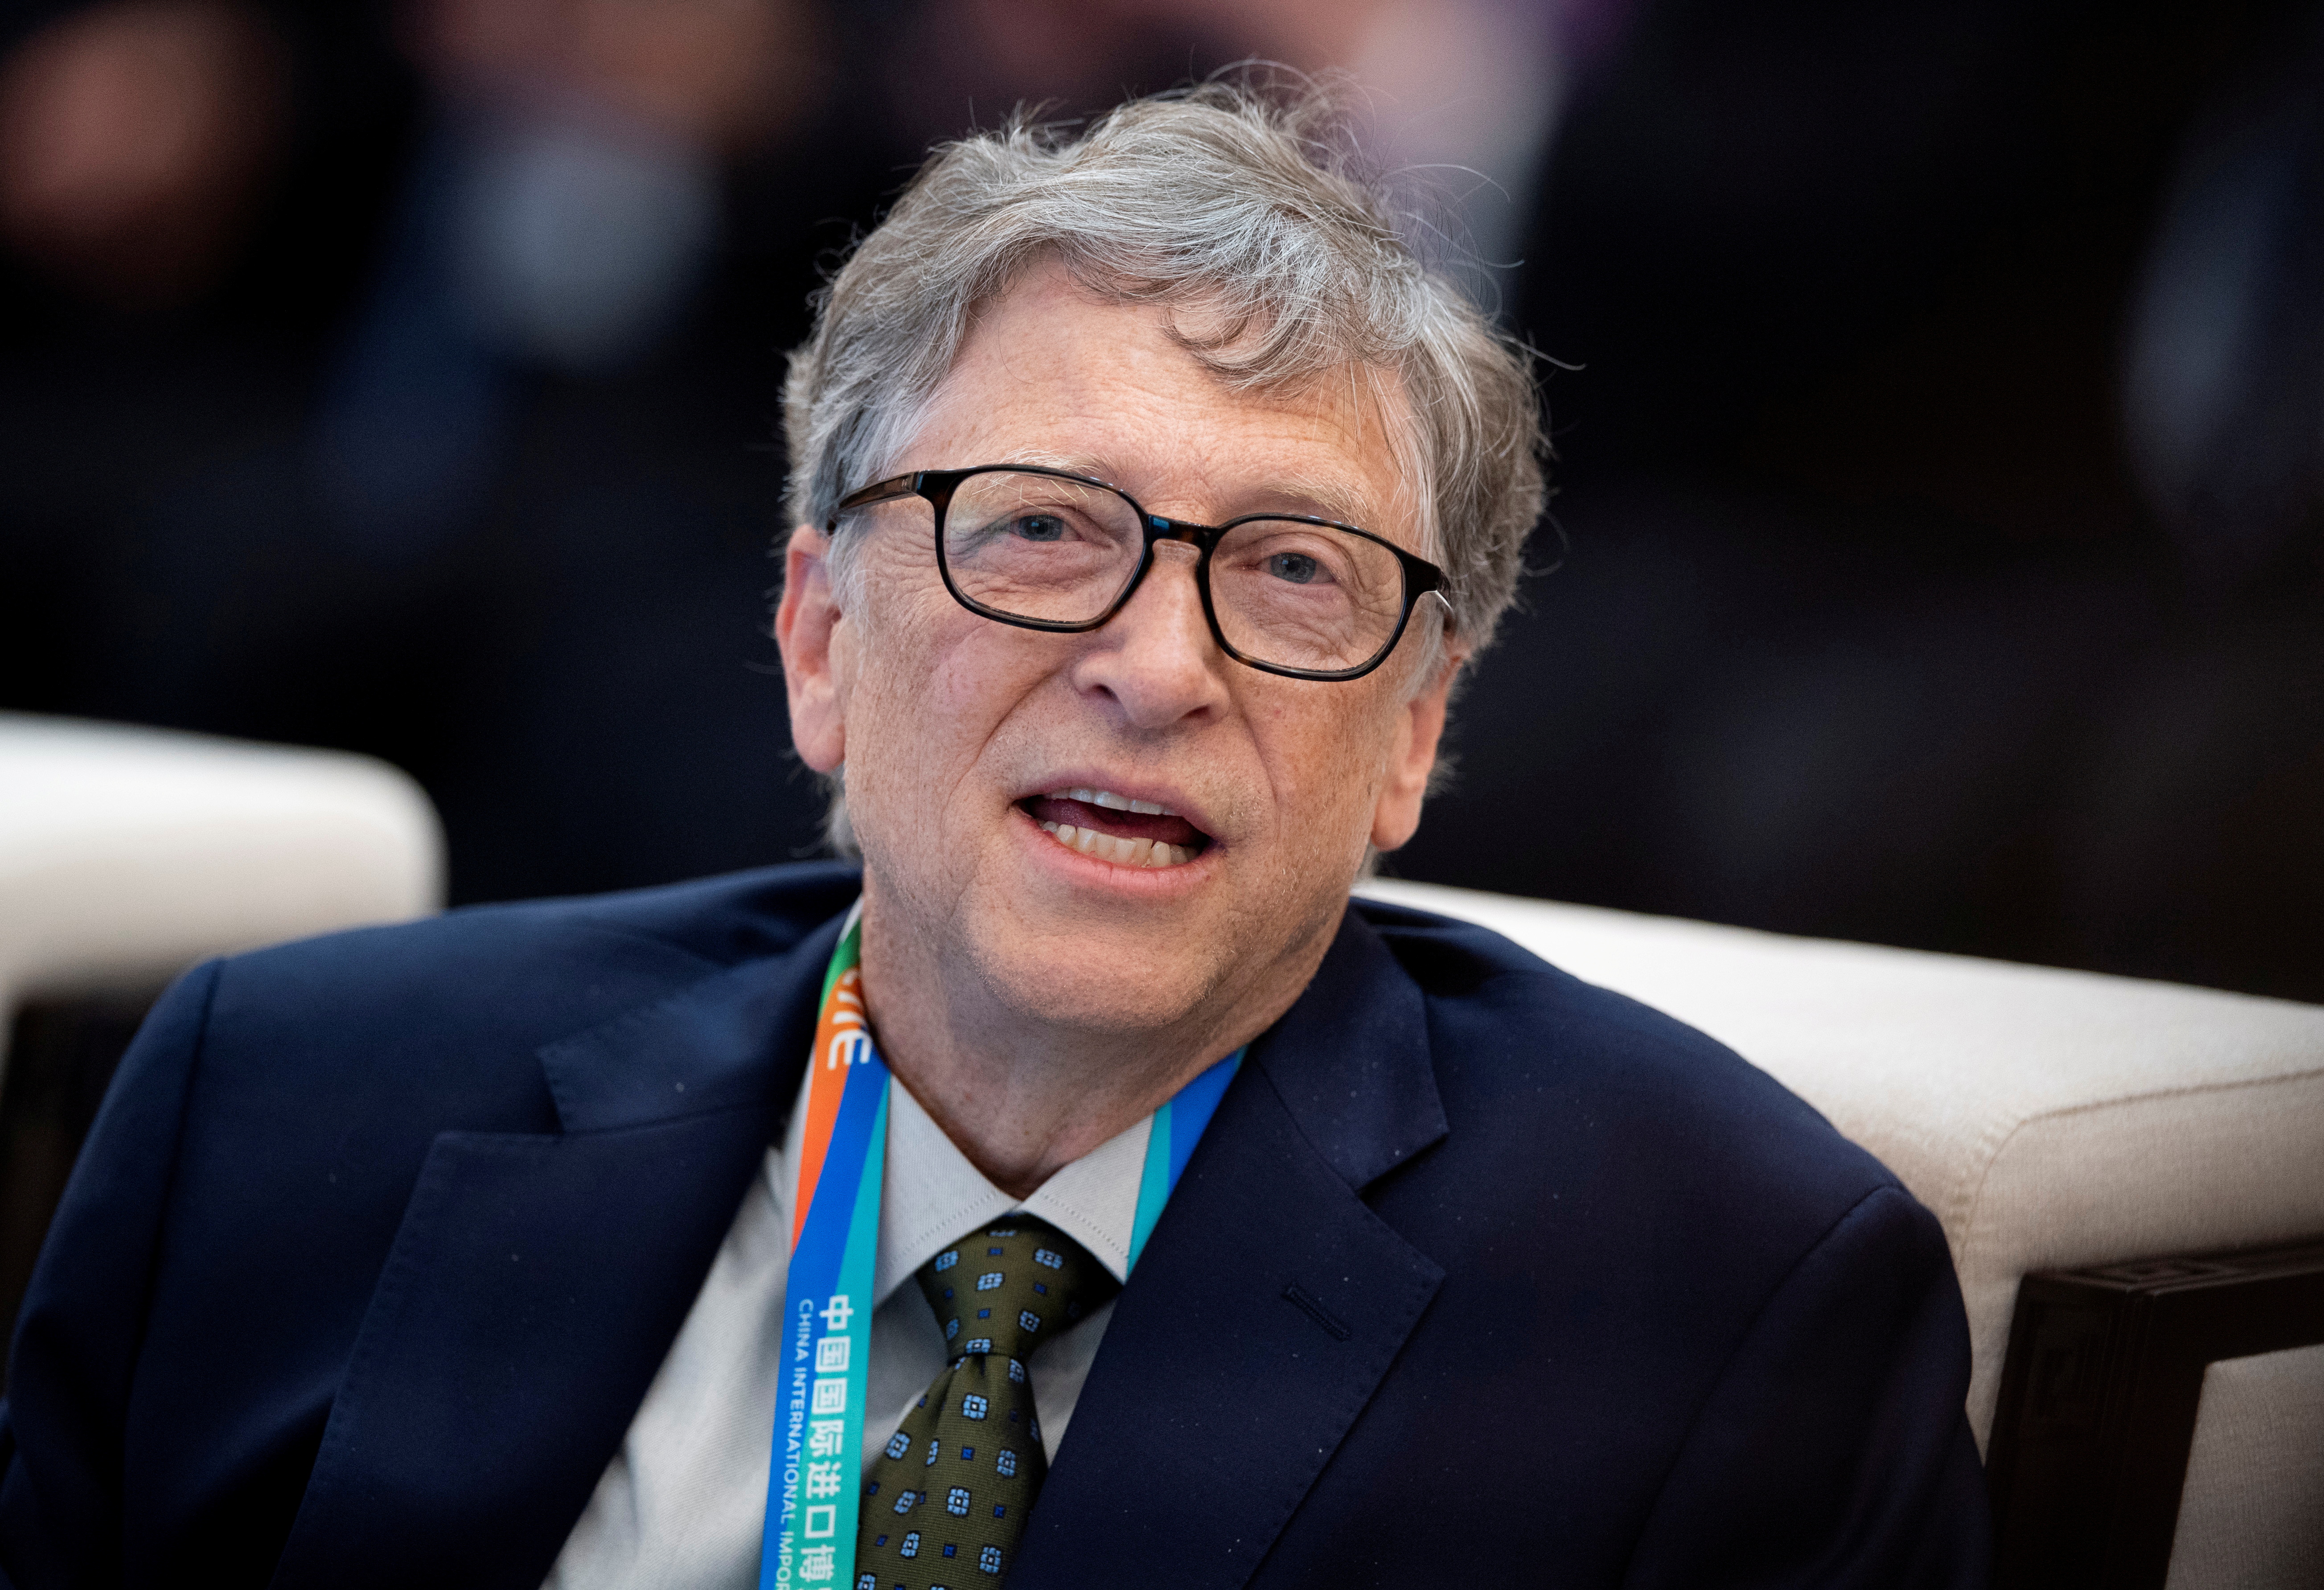 Microsoft co-founder Bill Gates attends a forum in Shanghai